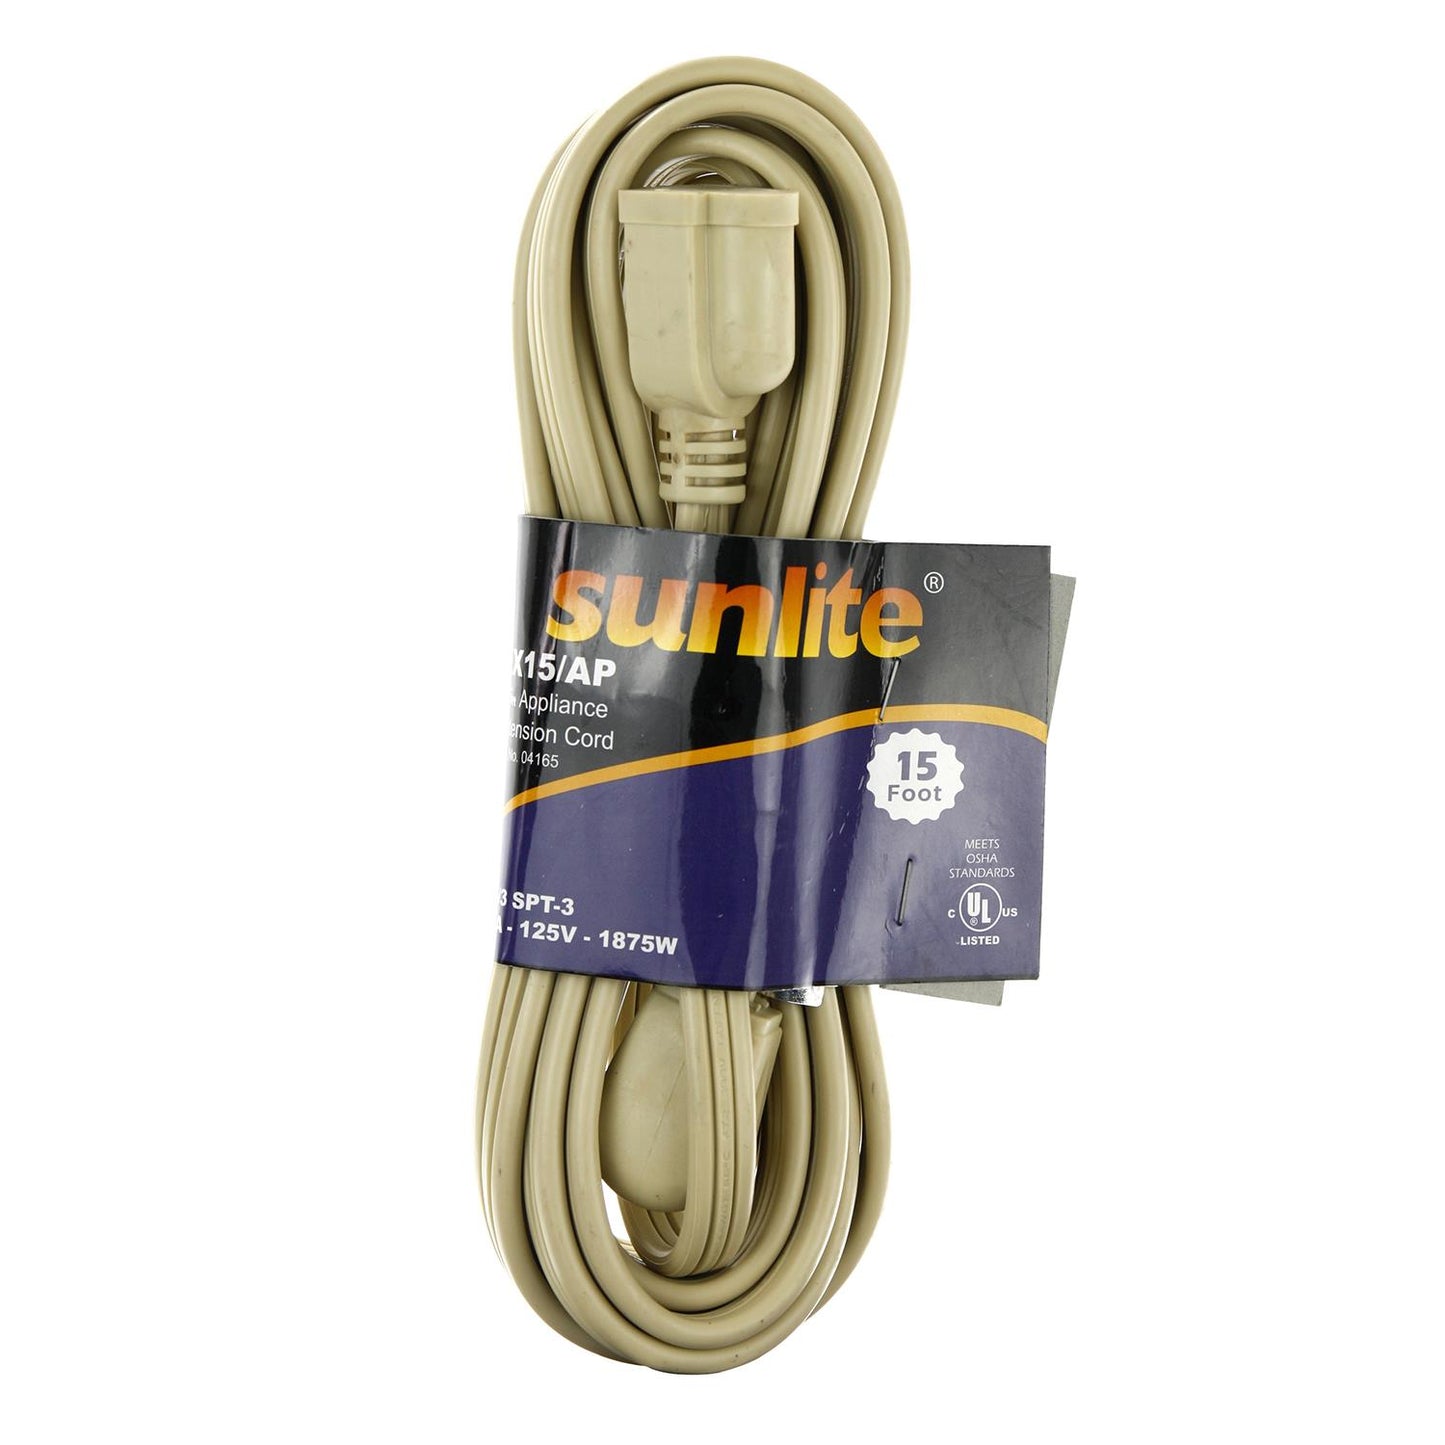 Sunlite EX15/AP Appliance 15-Feet Extension Cord, Grey